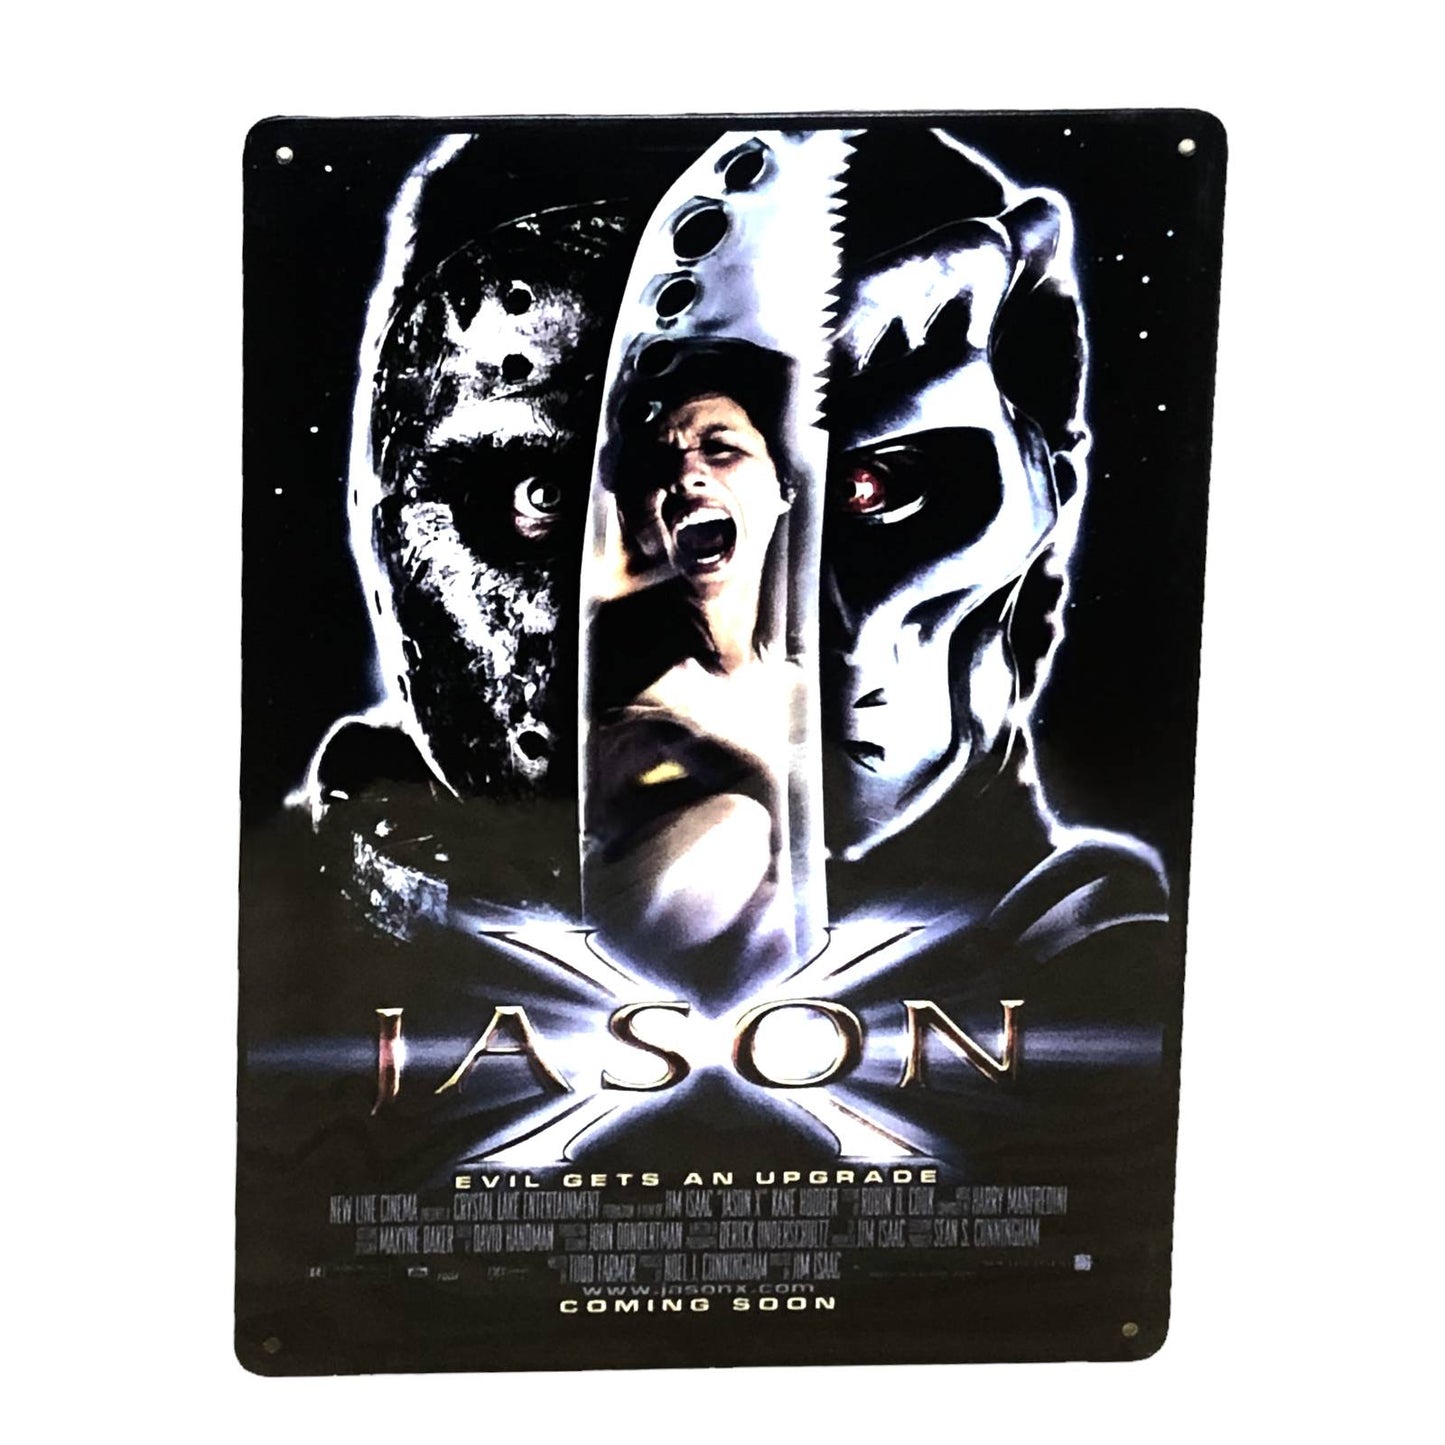 Jason X: Evil Gets an Upgrade Movie Poster Metal Tin Sign 8"x12"